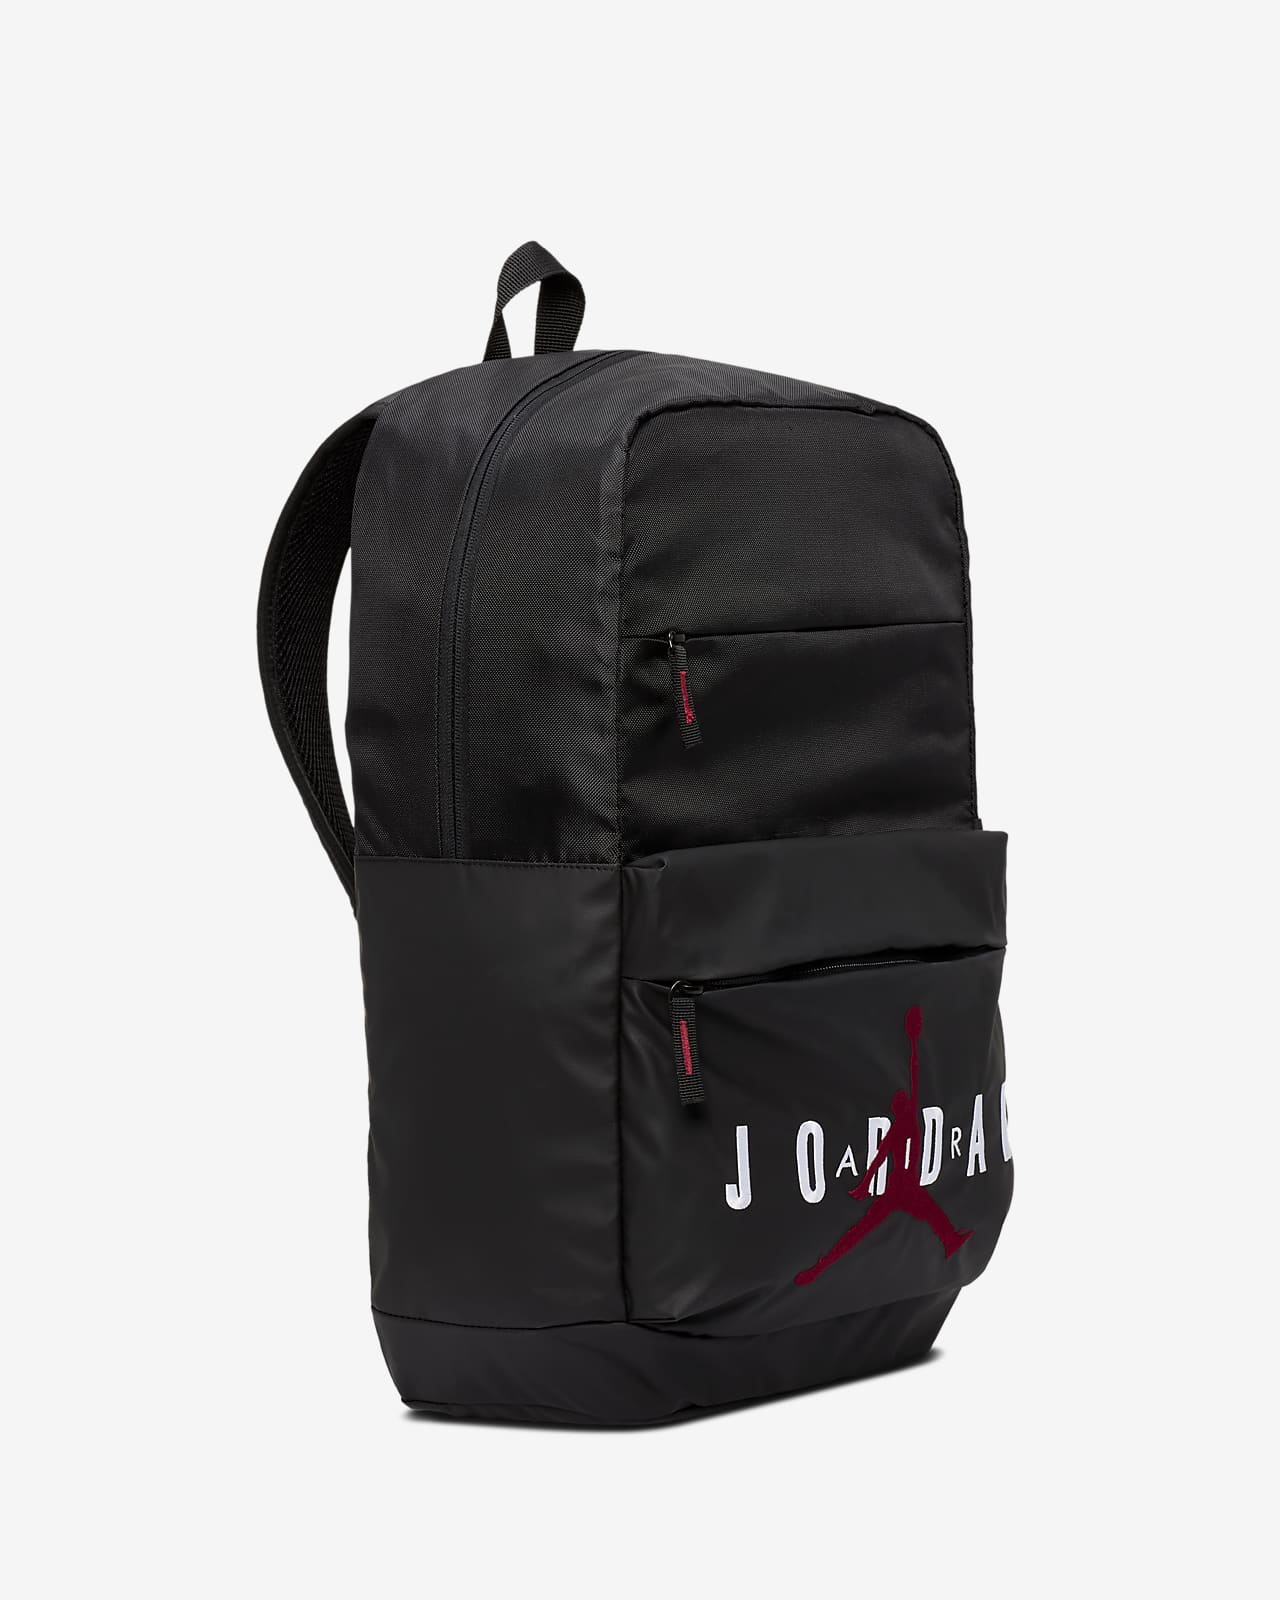 jordan backpack australia